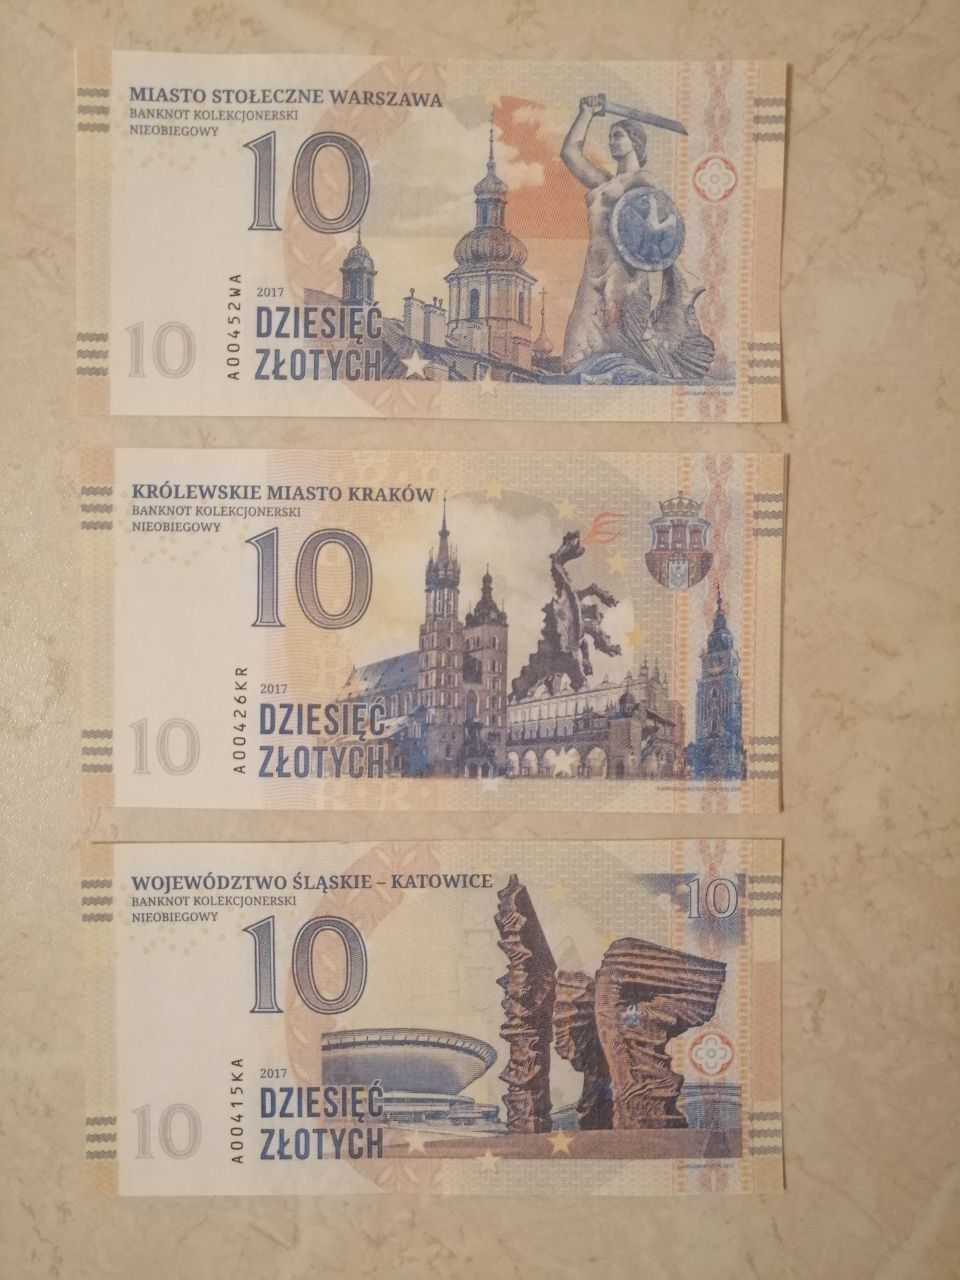 Banknoty kolekcjonerskie.